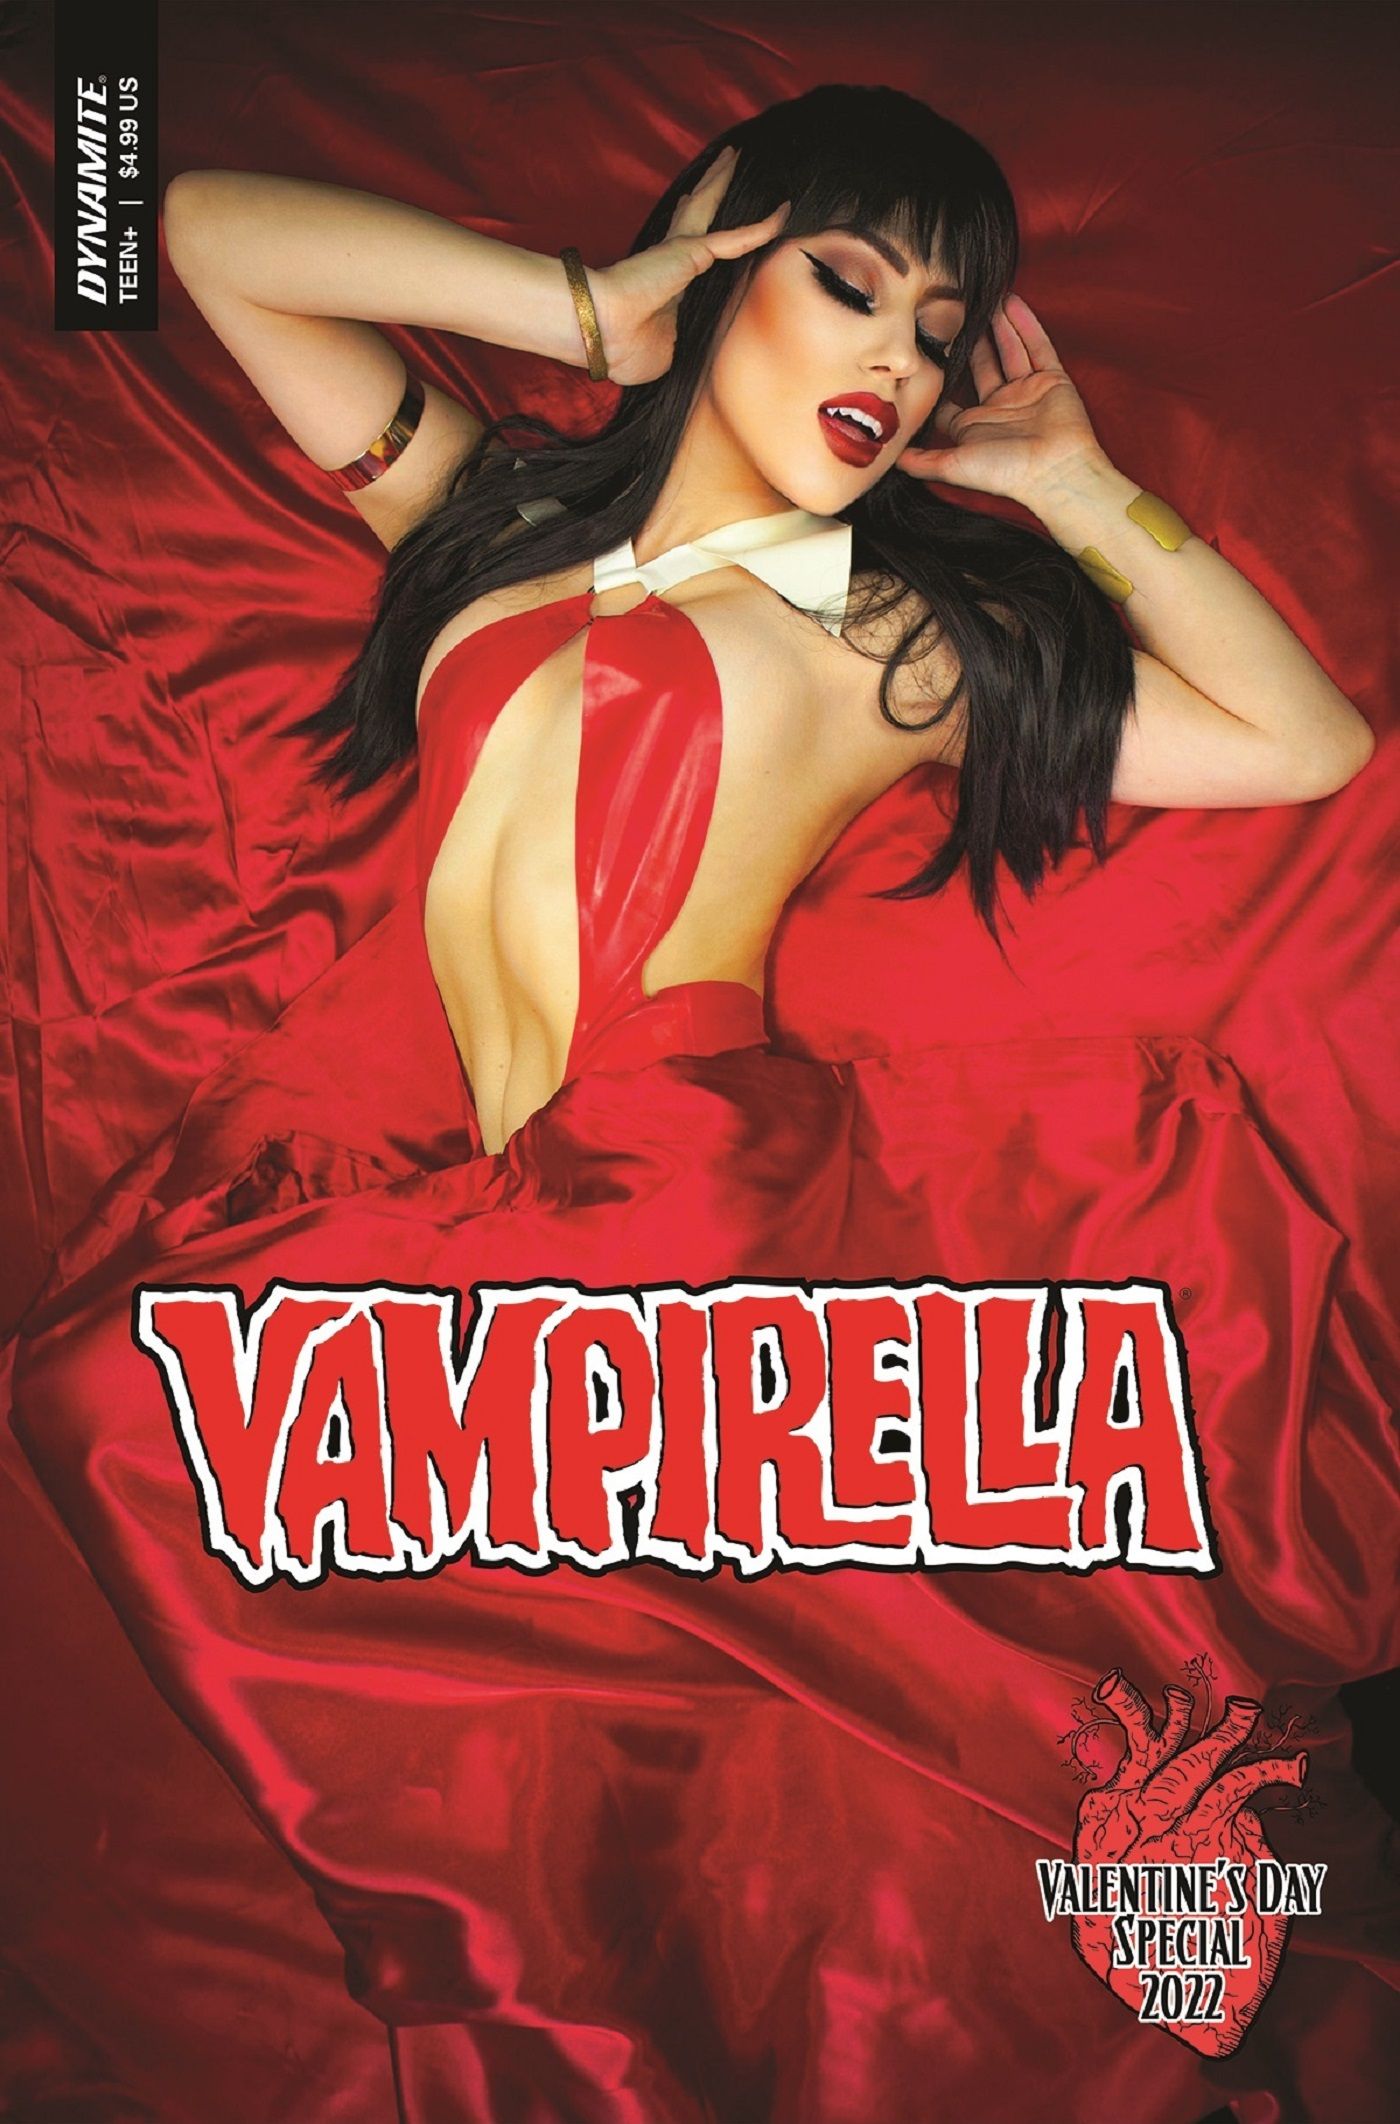 Vampirella Valentine’s Special 2022 Cosplay Cover